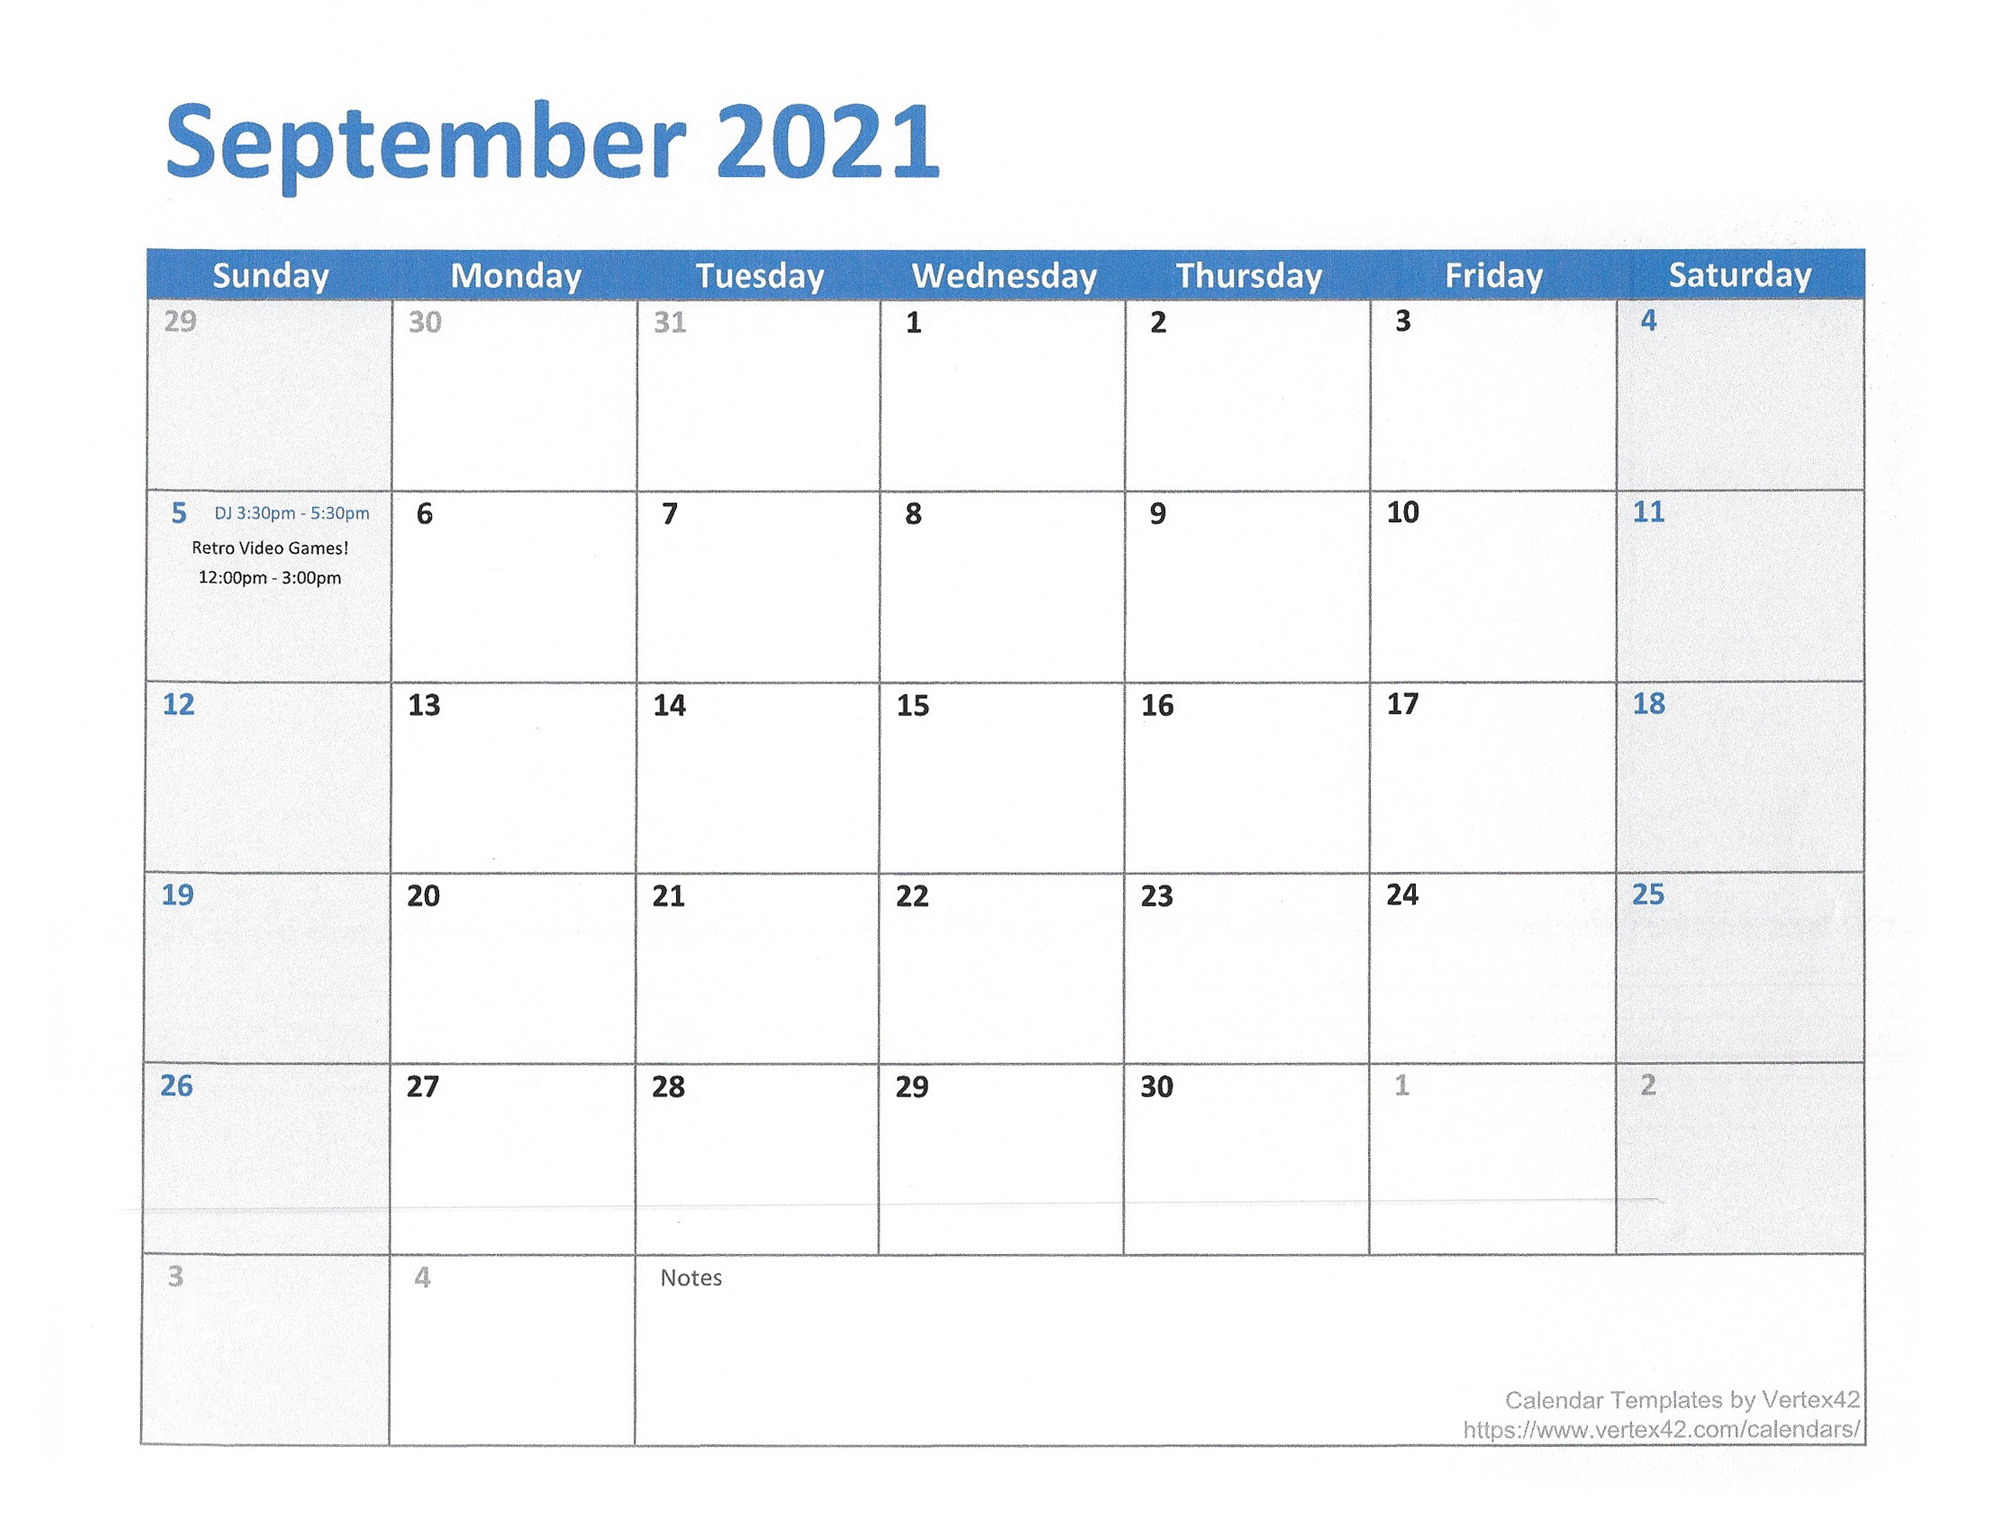 September-21-calendar-of-events